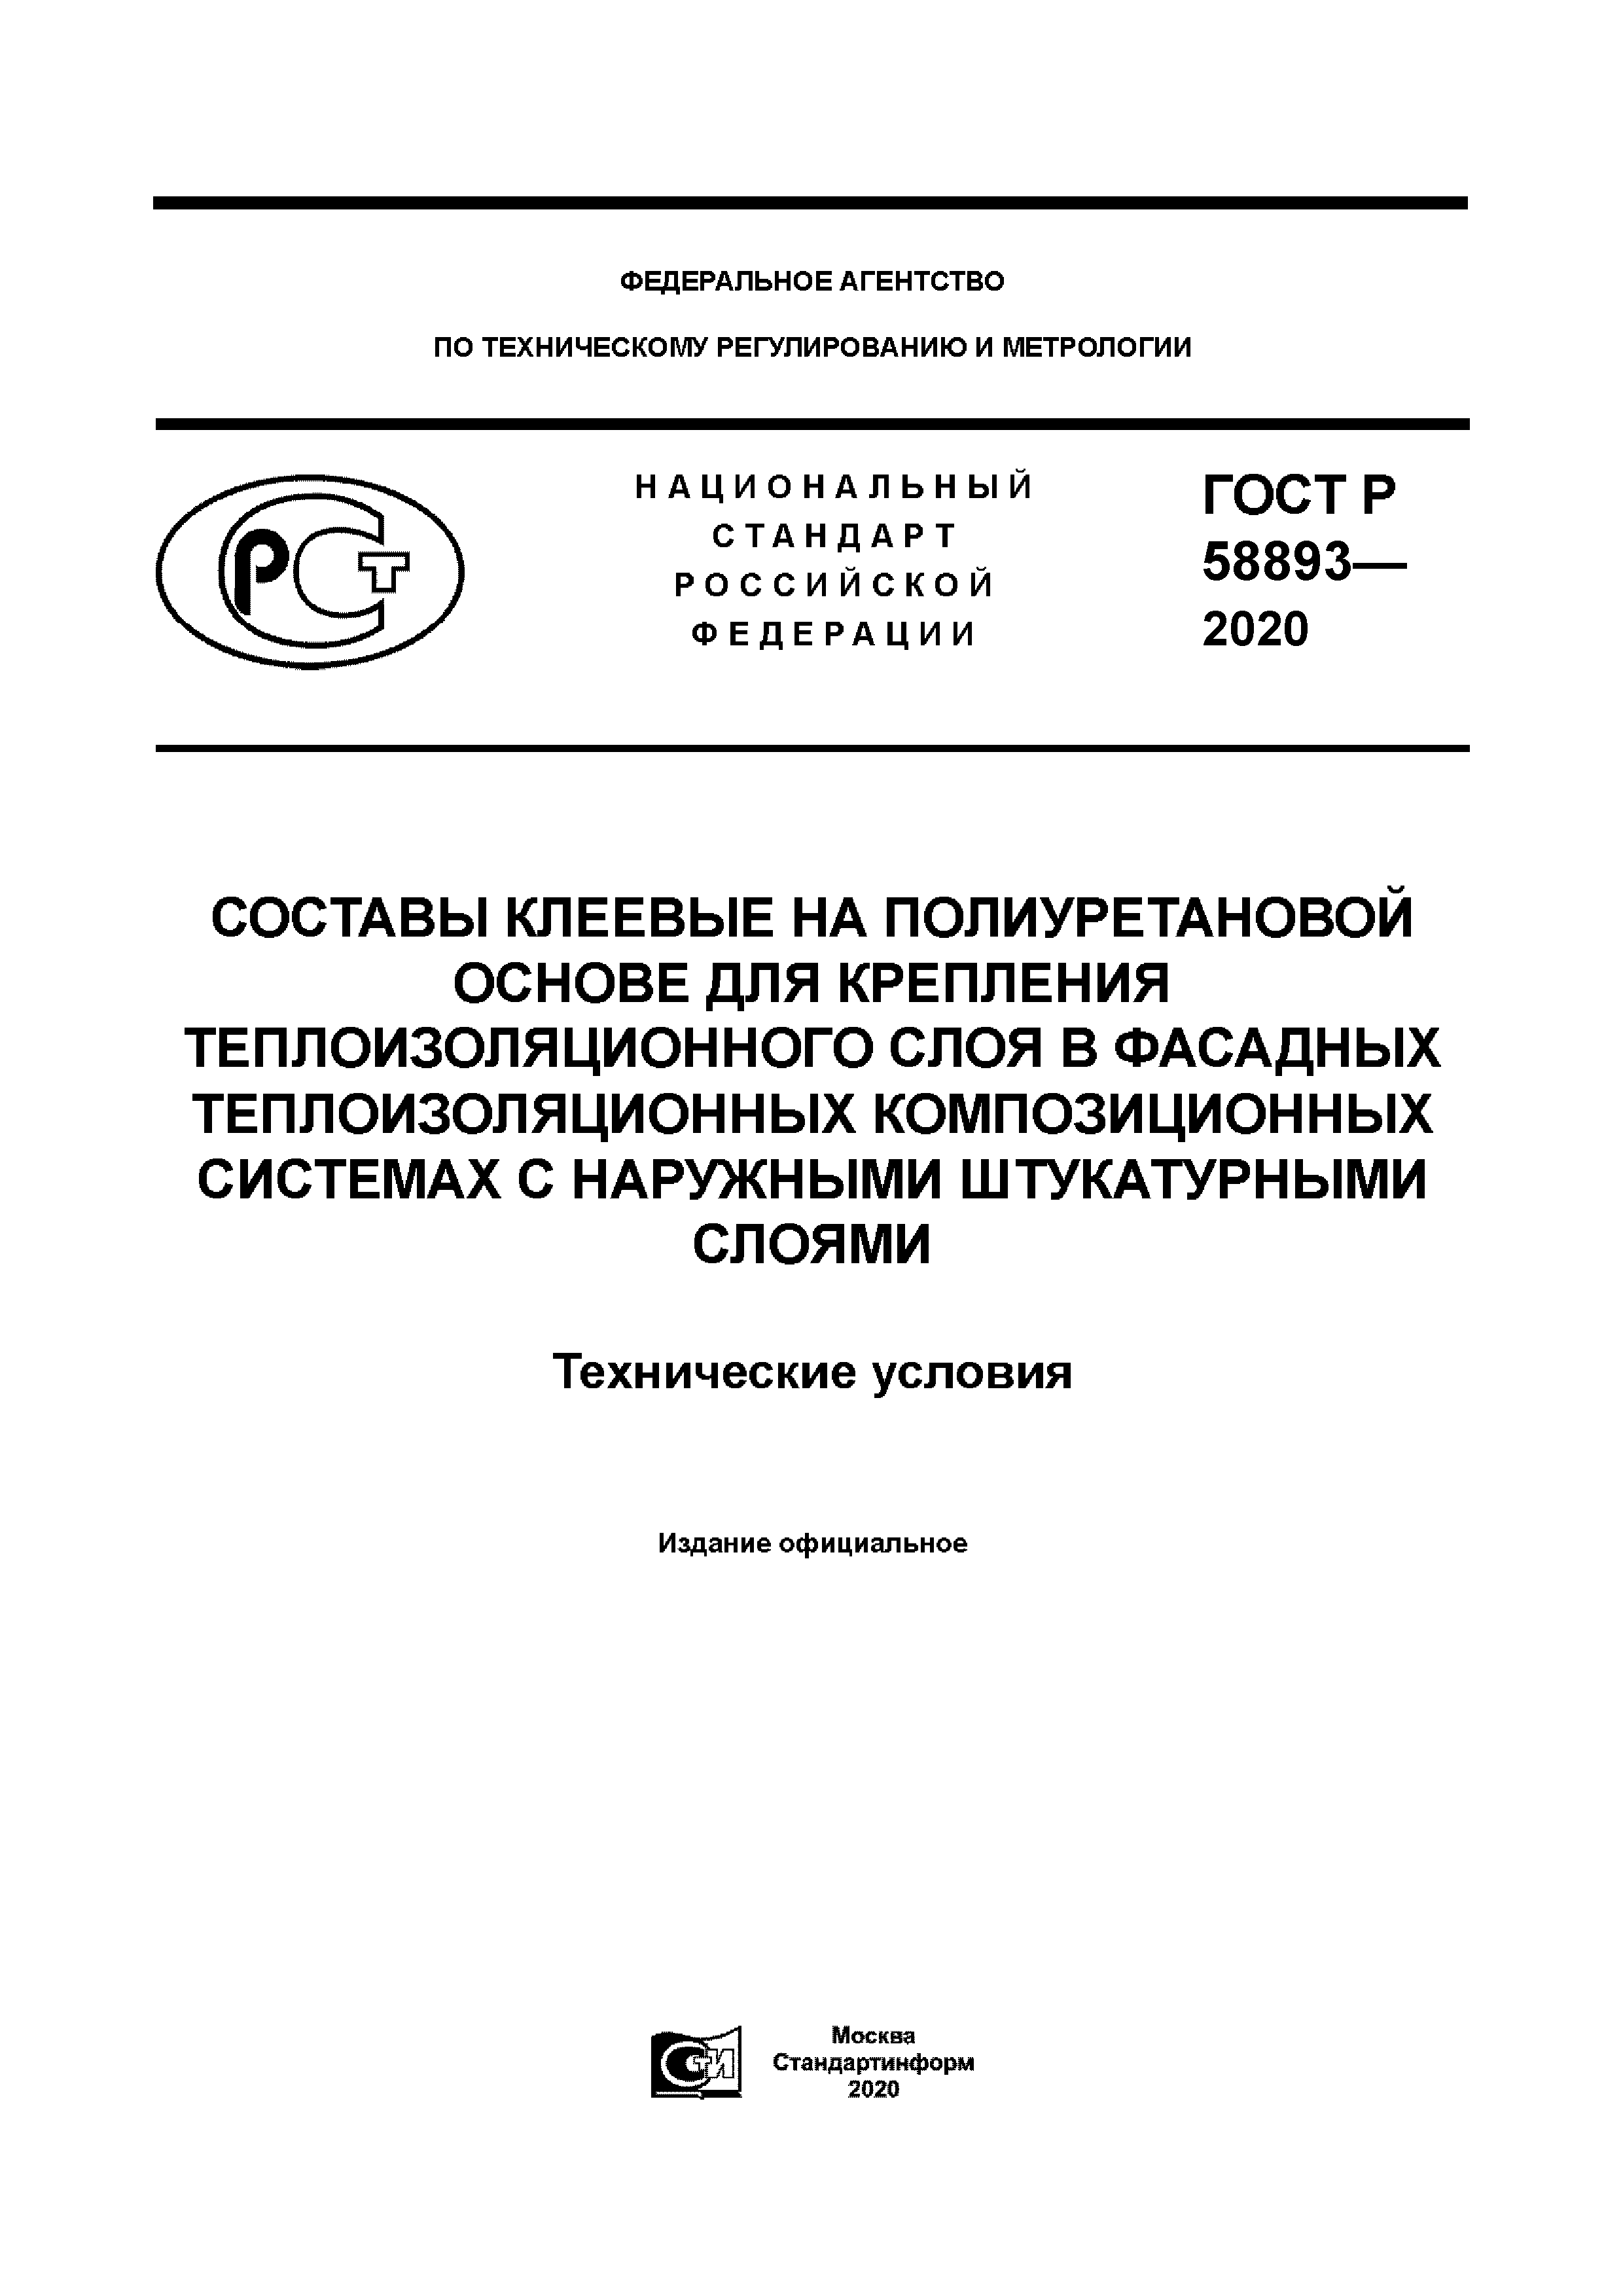 ГОСТ Р 58893-2020